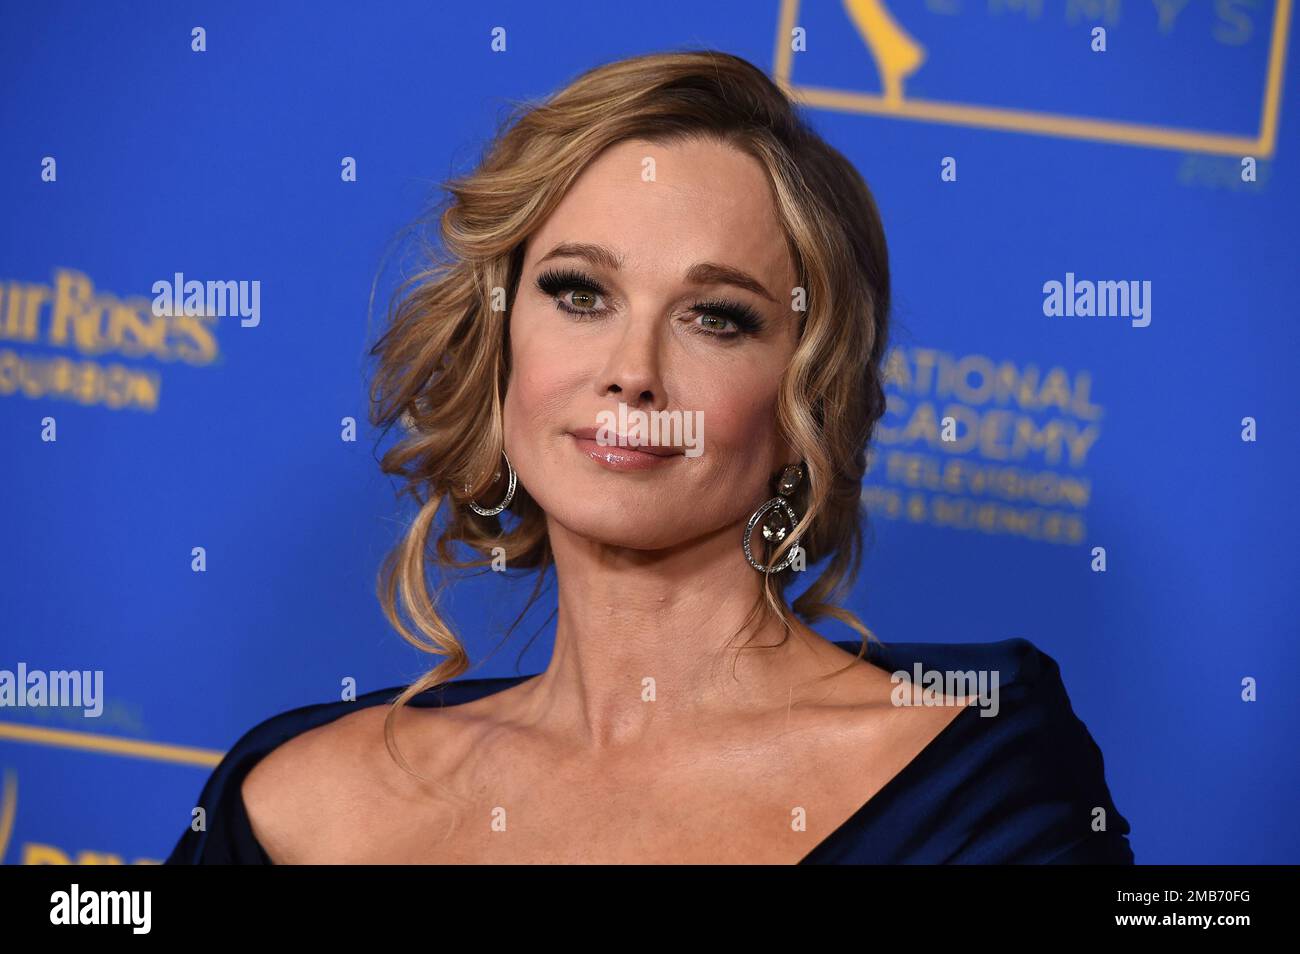 Jennifer Gareis arrives at the 49th annual Daytime Emmy Awards on